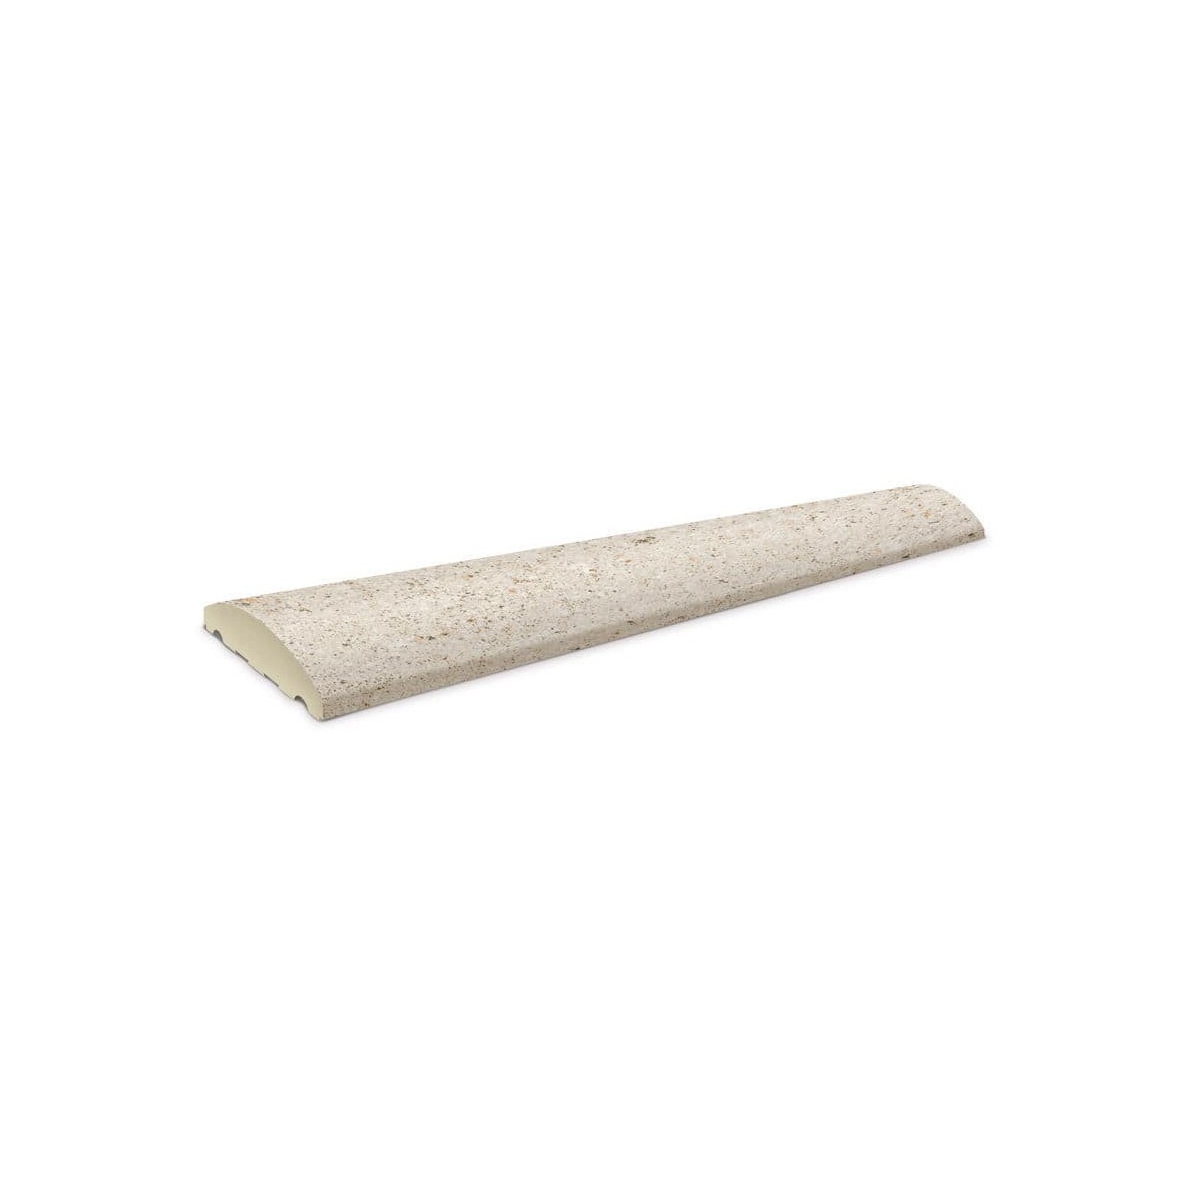 Media caña exterior Stromboli Cream de 6x50